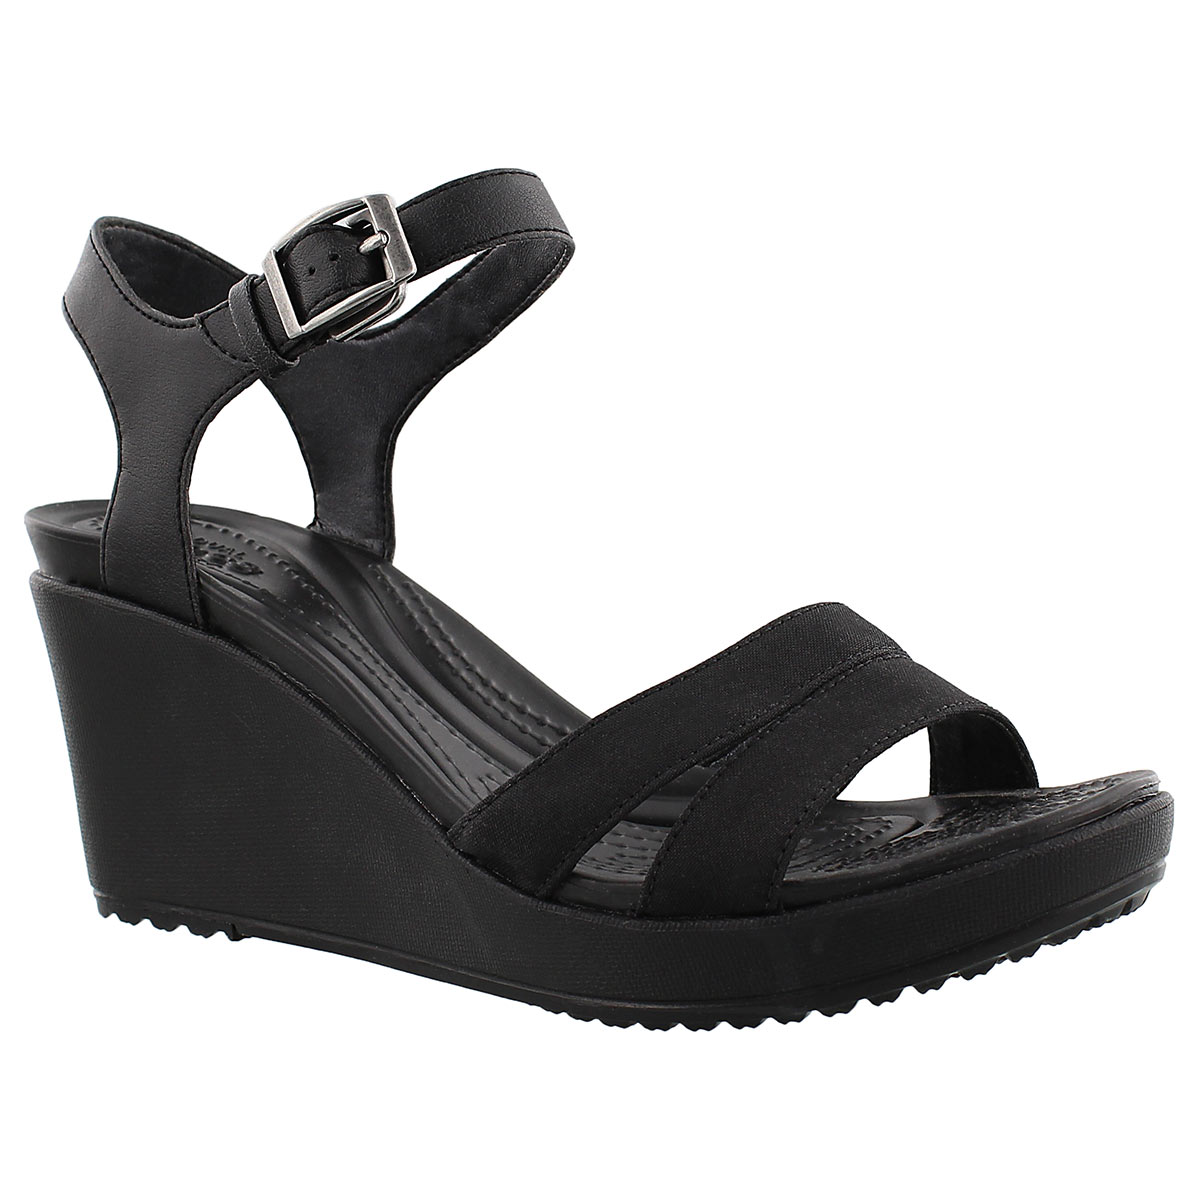 Crocs Women's Leigh II Ankle Strap Wedge Sandal | eBay